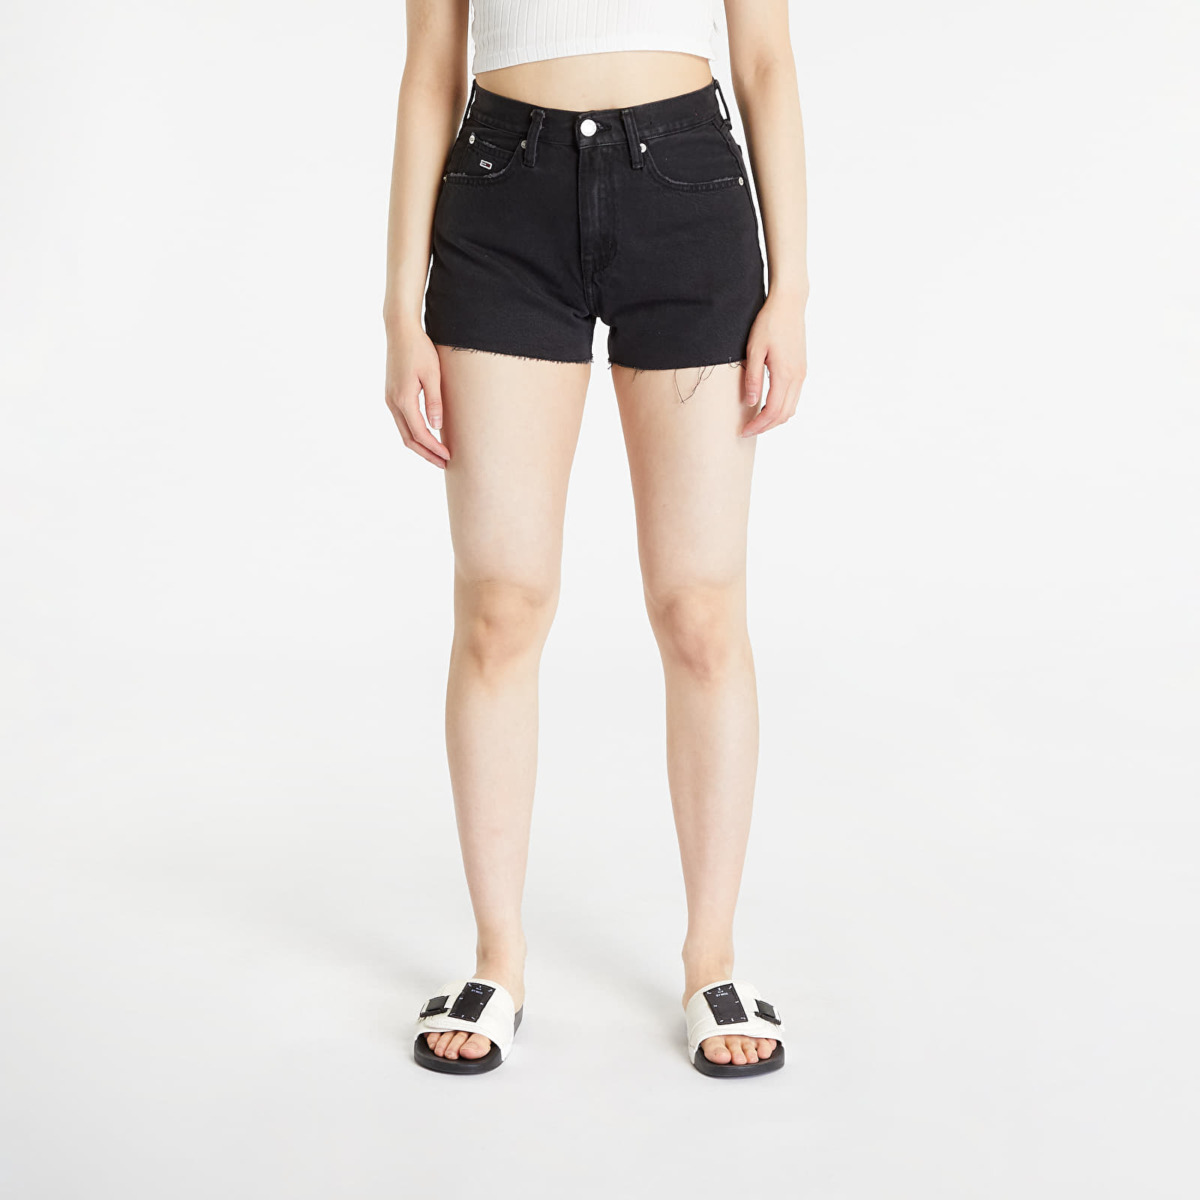 Tommy Hilfiger Shorts Black for Woman at Footshop GOOFASH